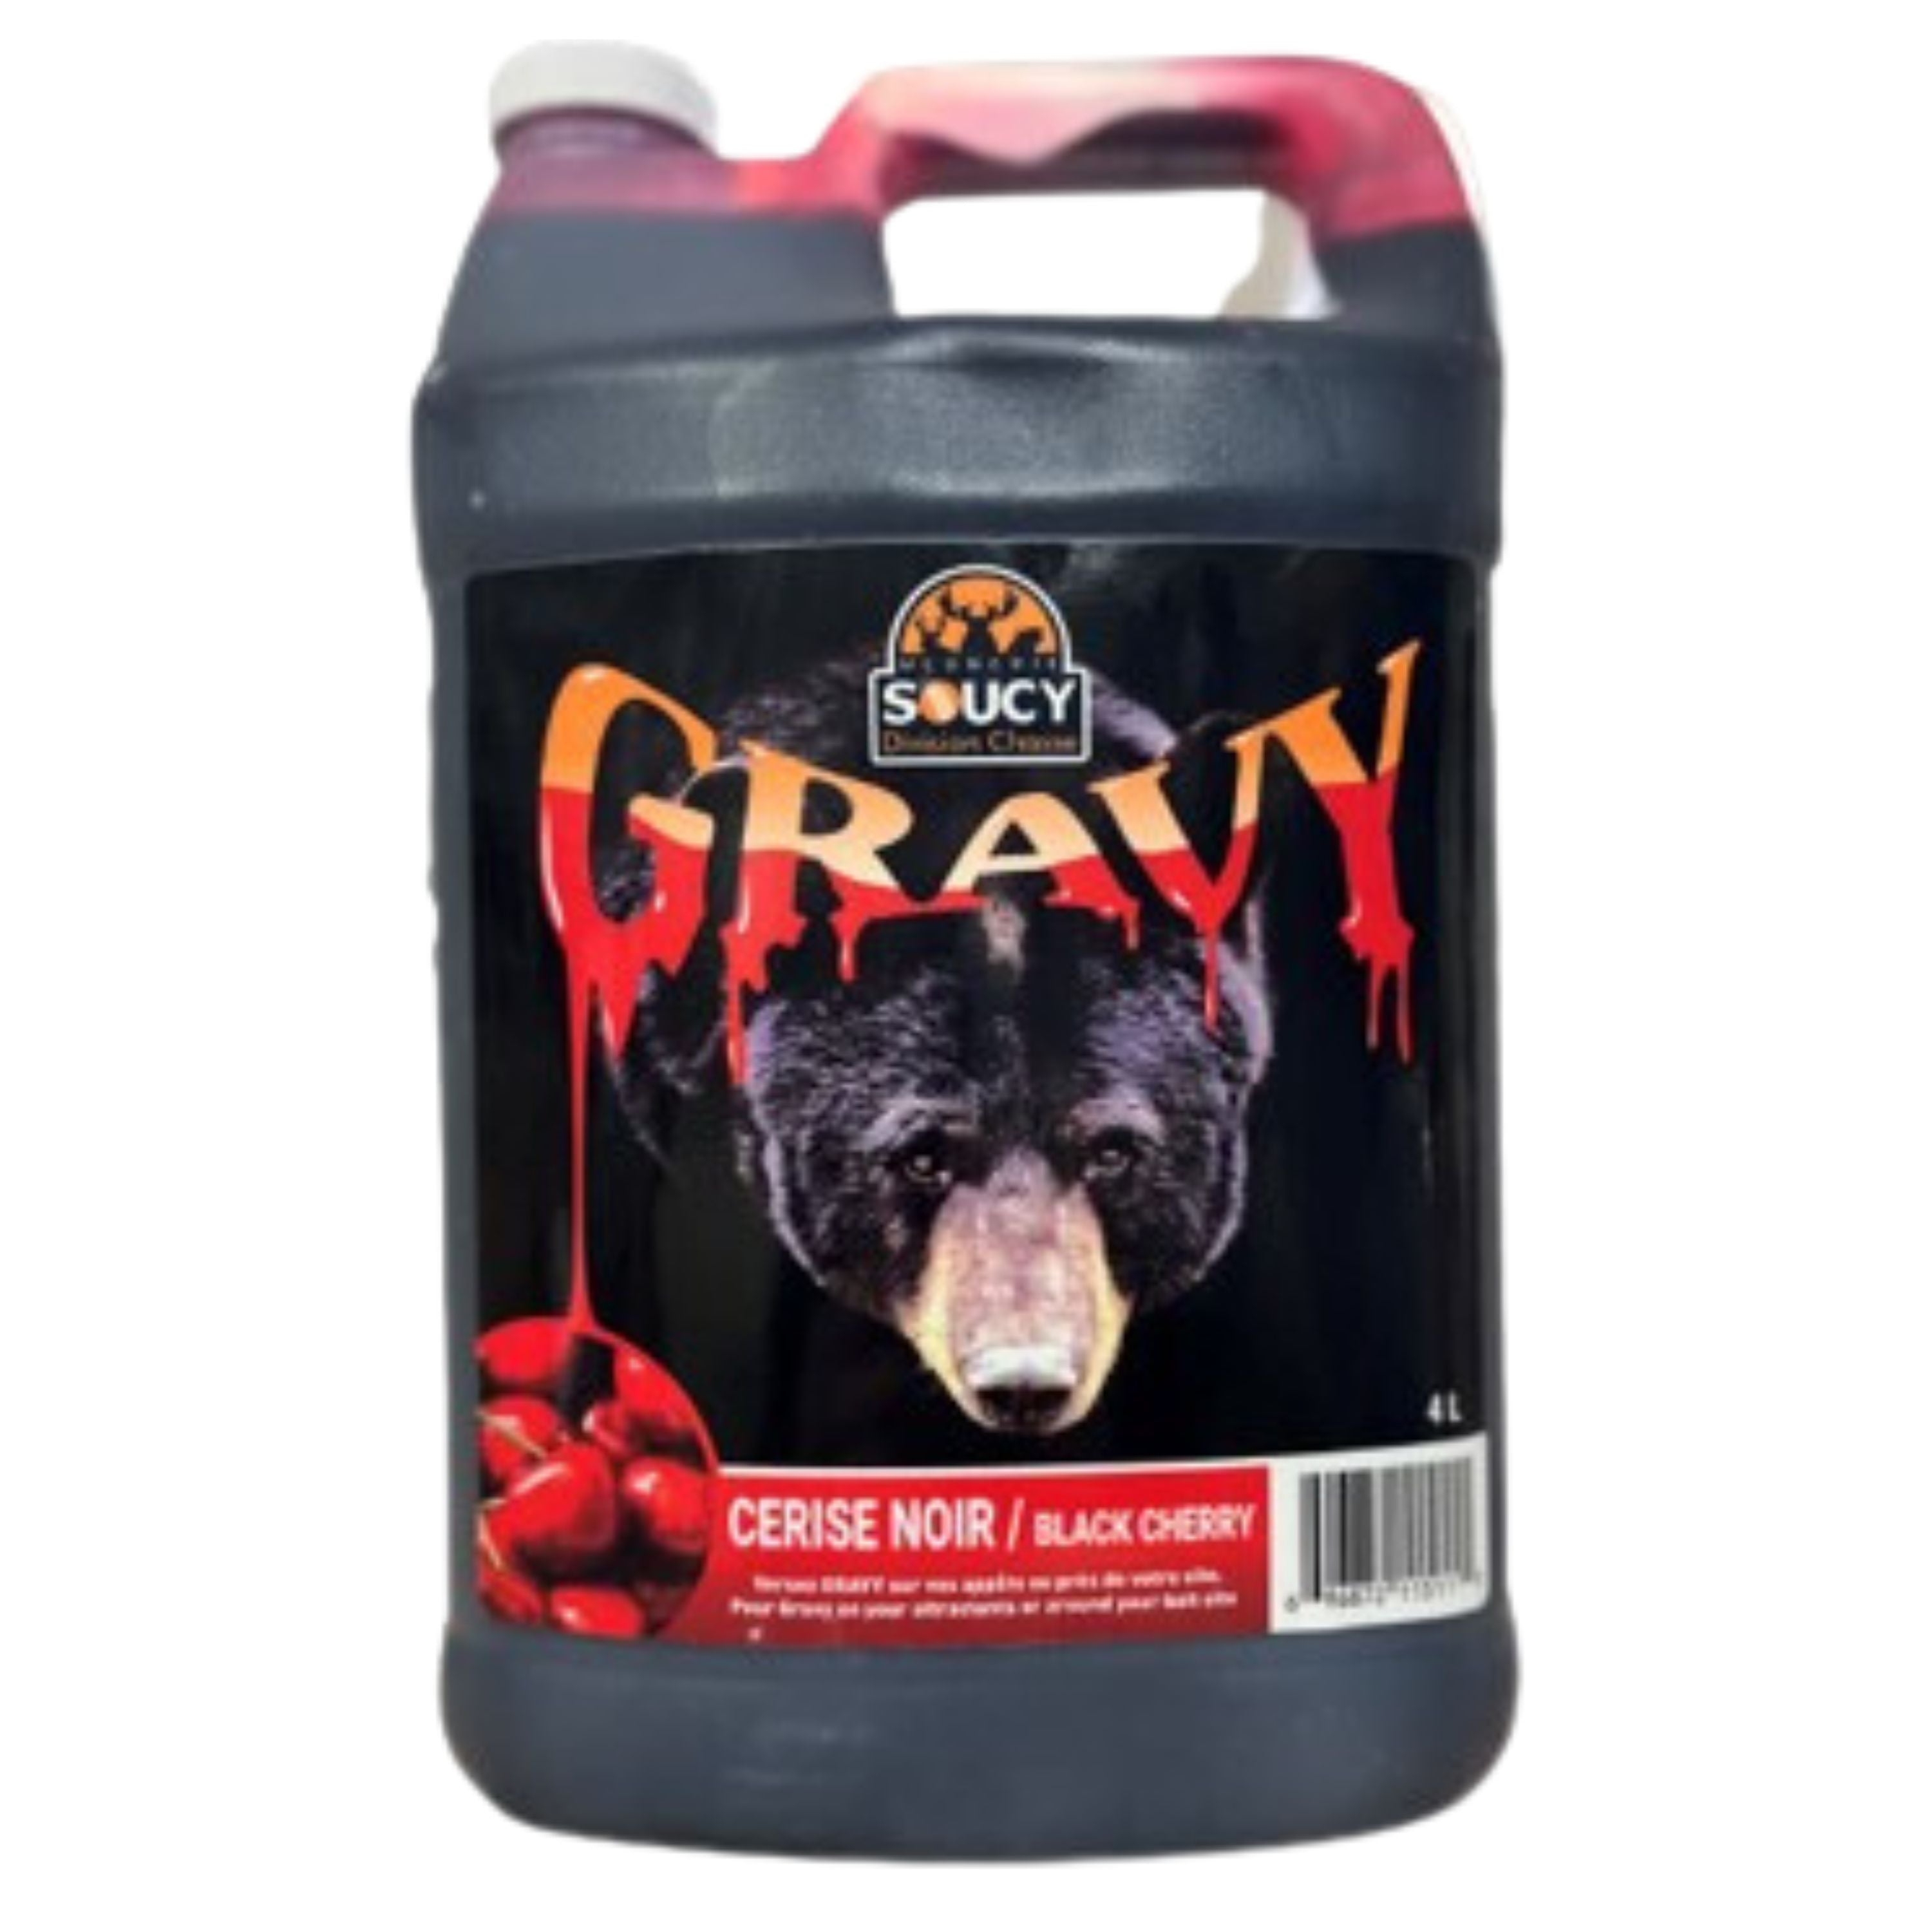 "Gravy" Bear attractant black cherry - 4 L